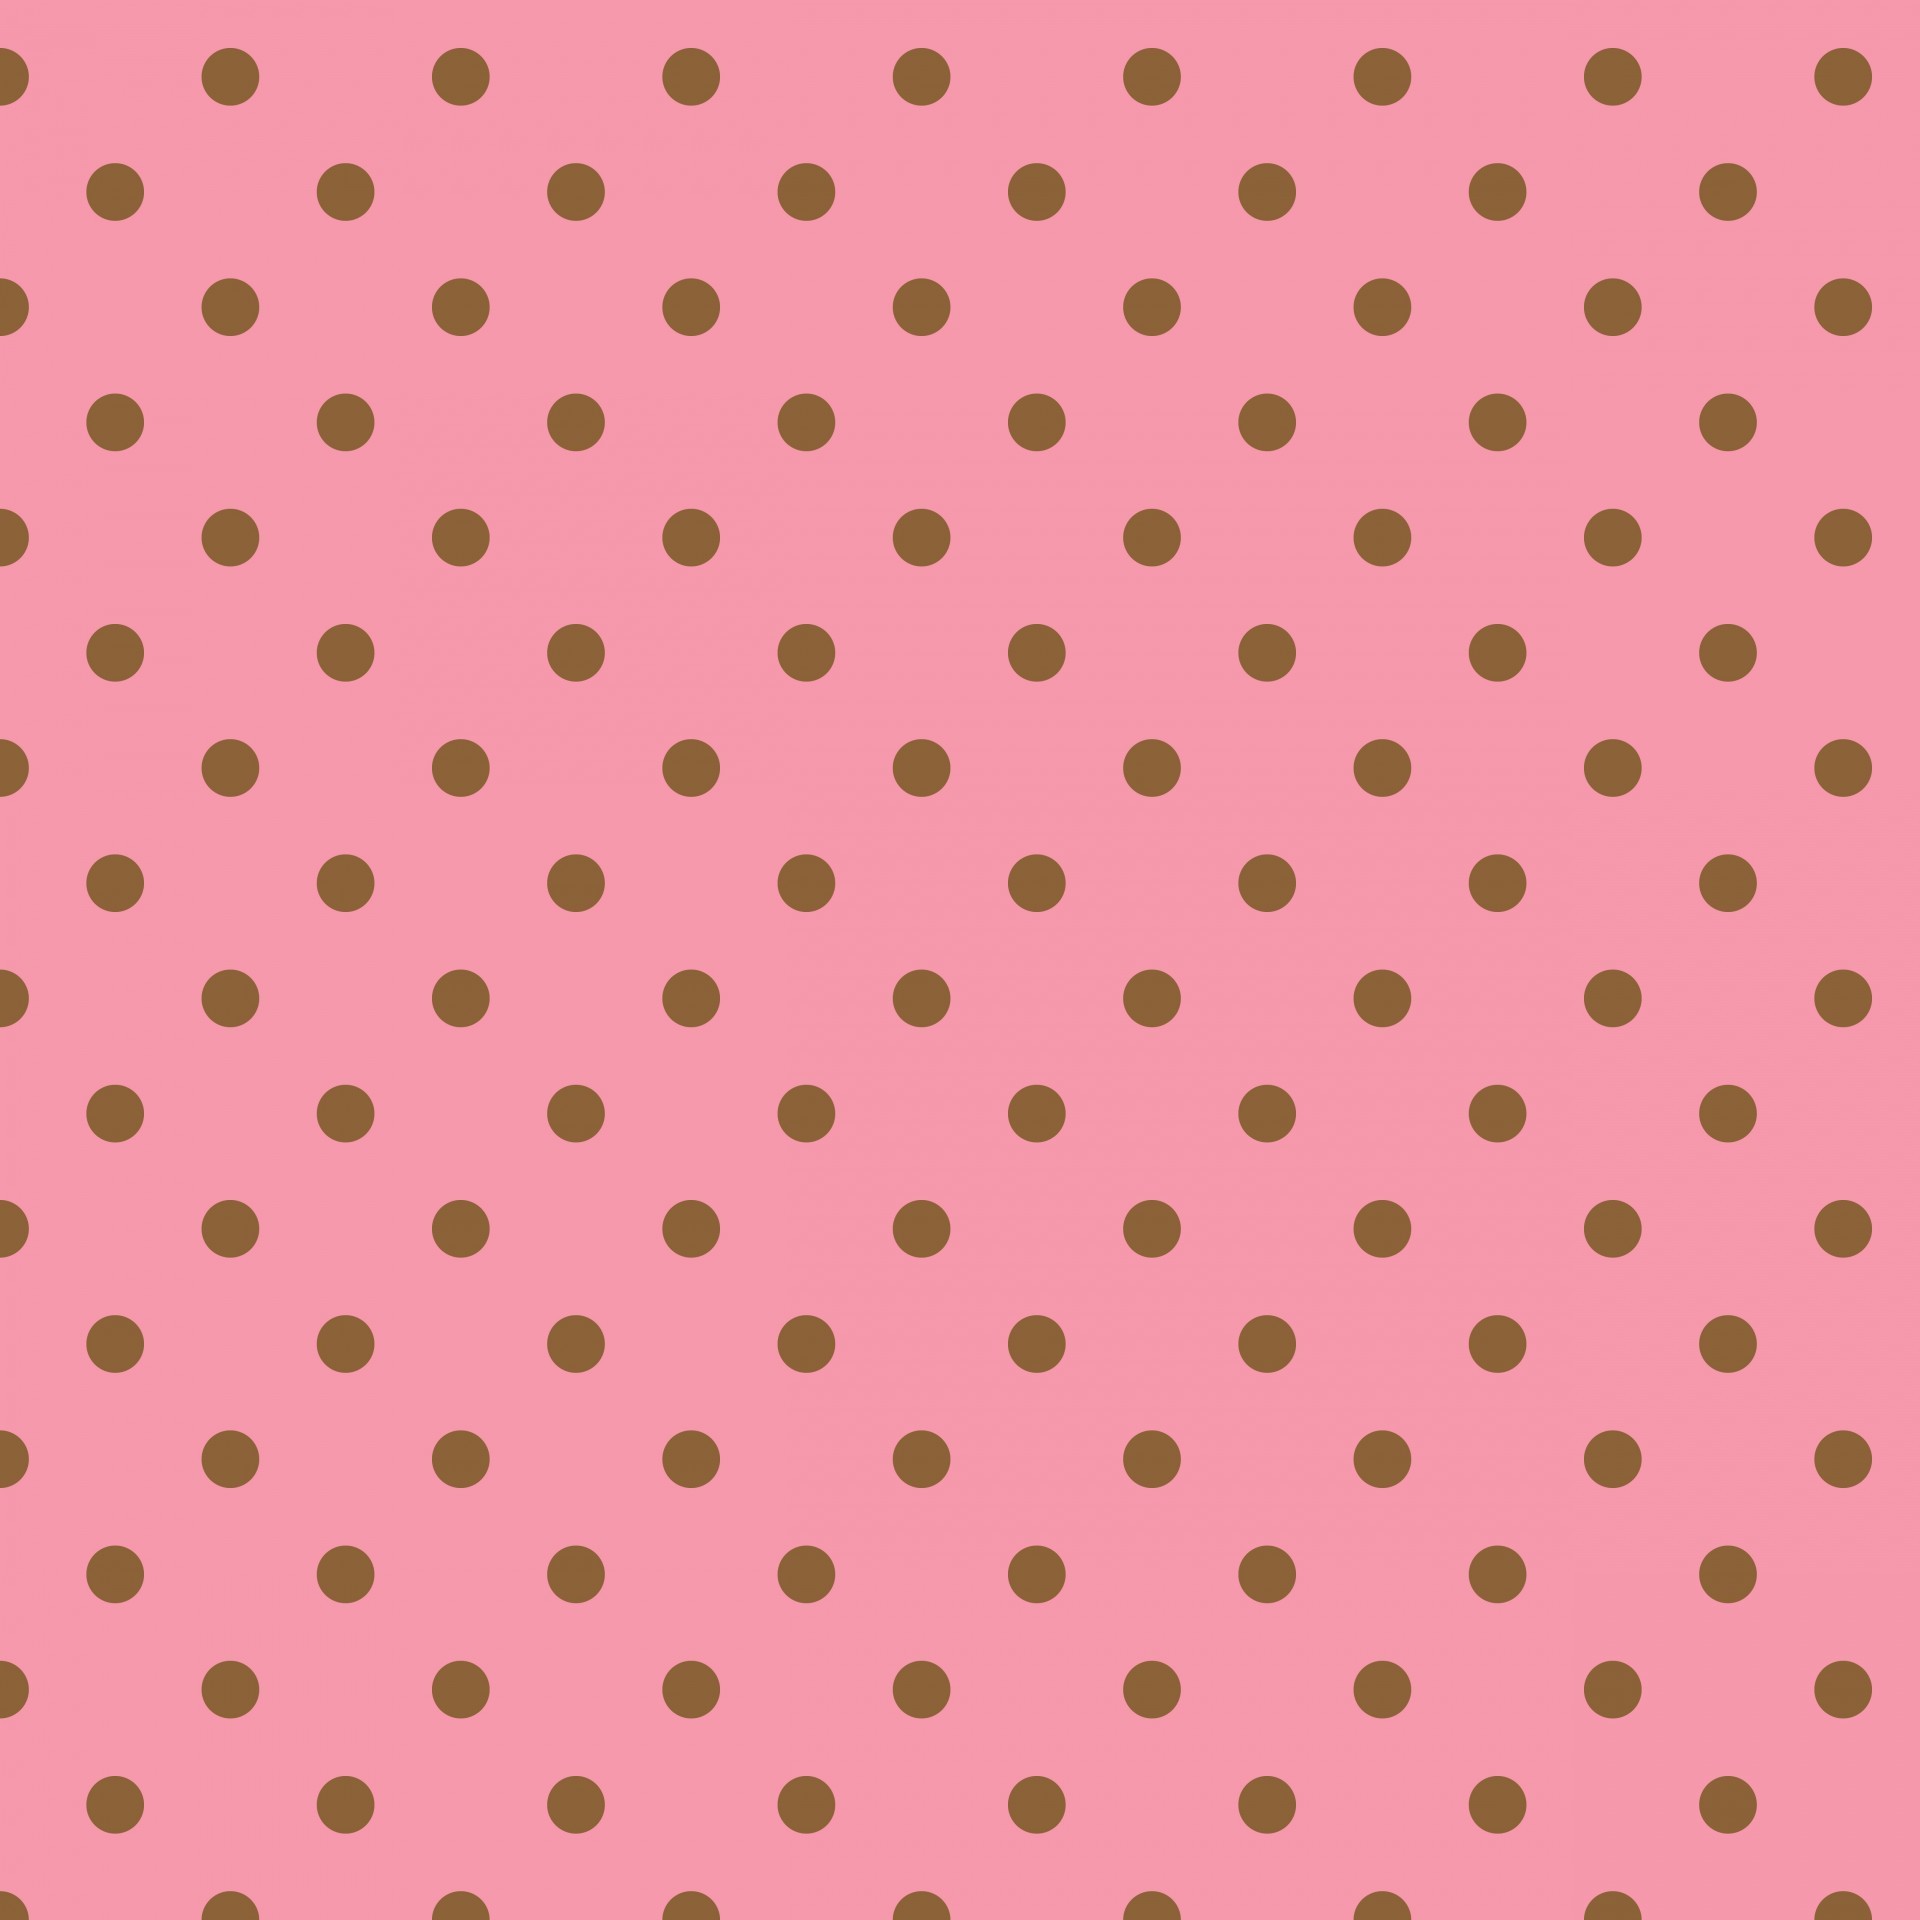 Polka Dots Pink Background Polka Dots Background Pink